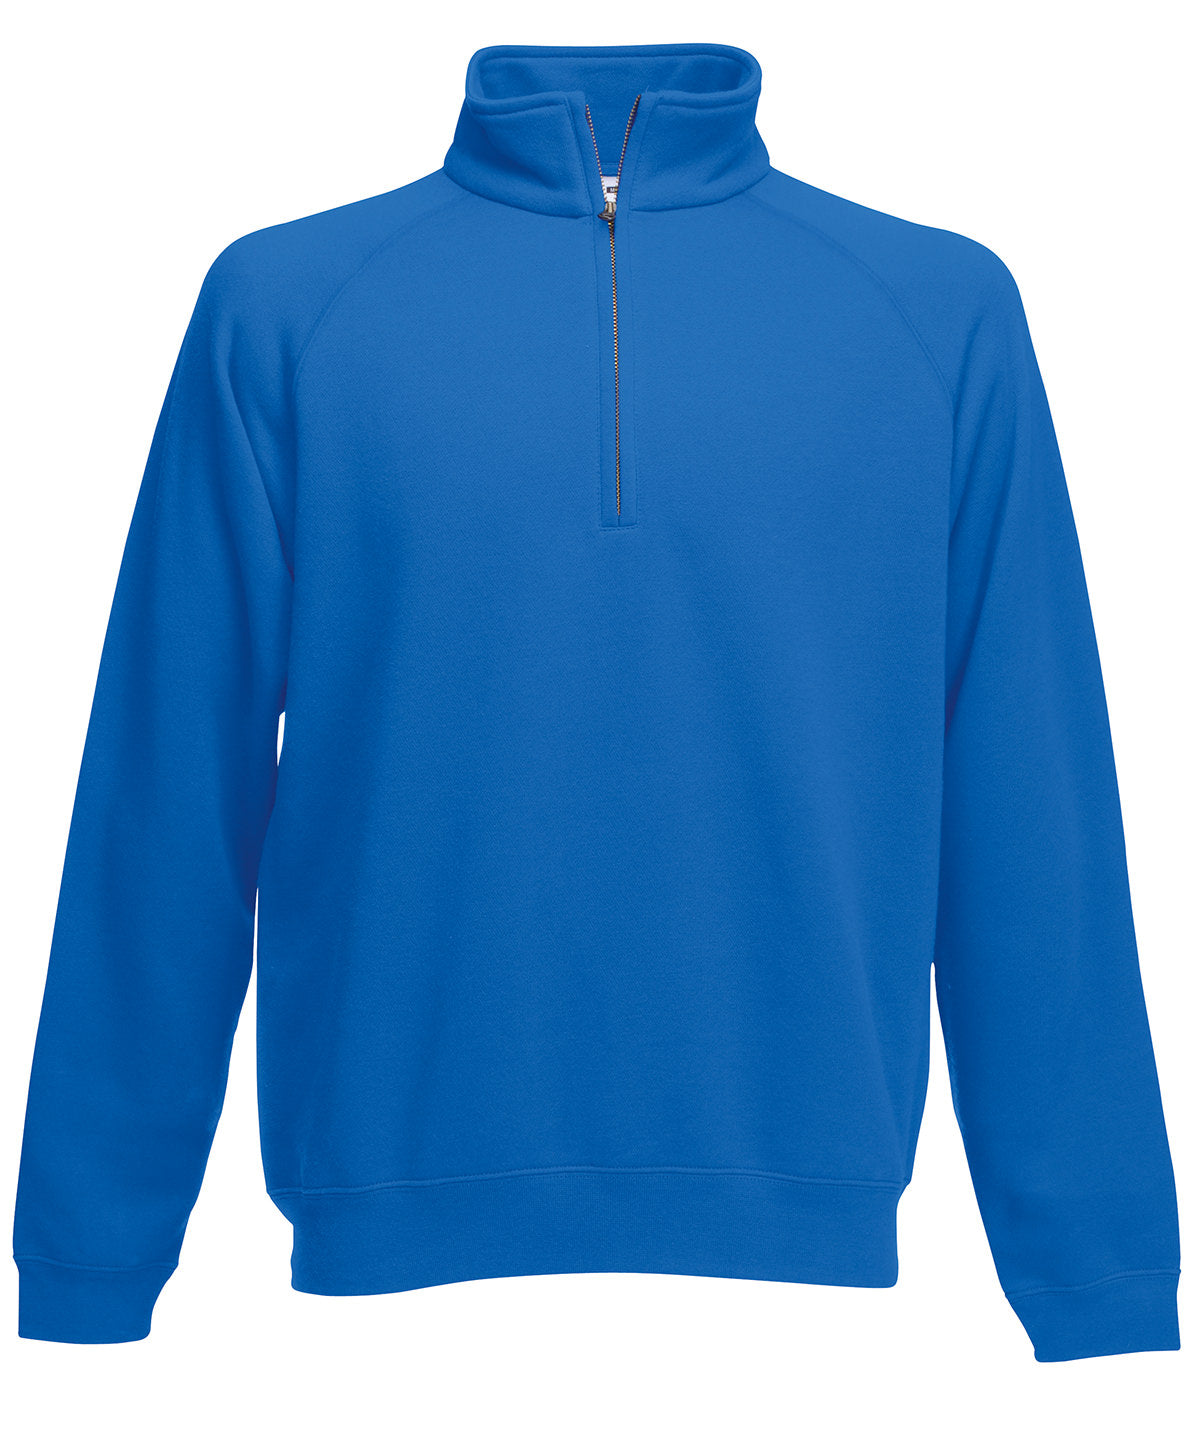 Personalised Sweatshirts - Bottle Fruit of the Loom Premium 70/30 zip-neck sweatshirt